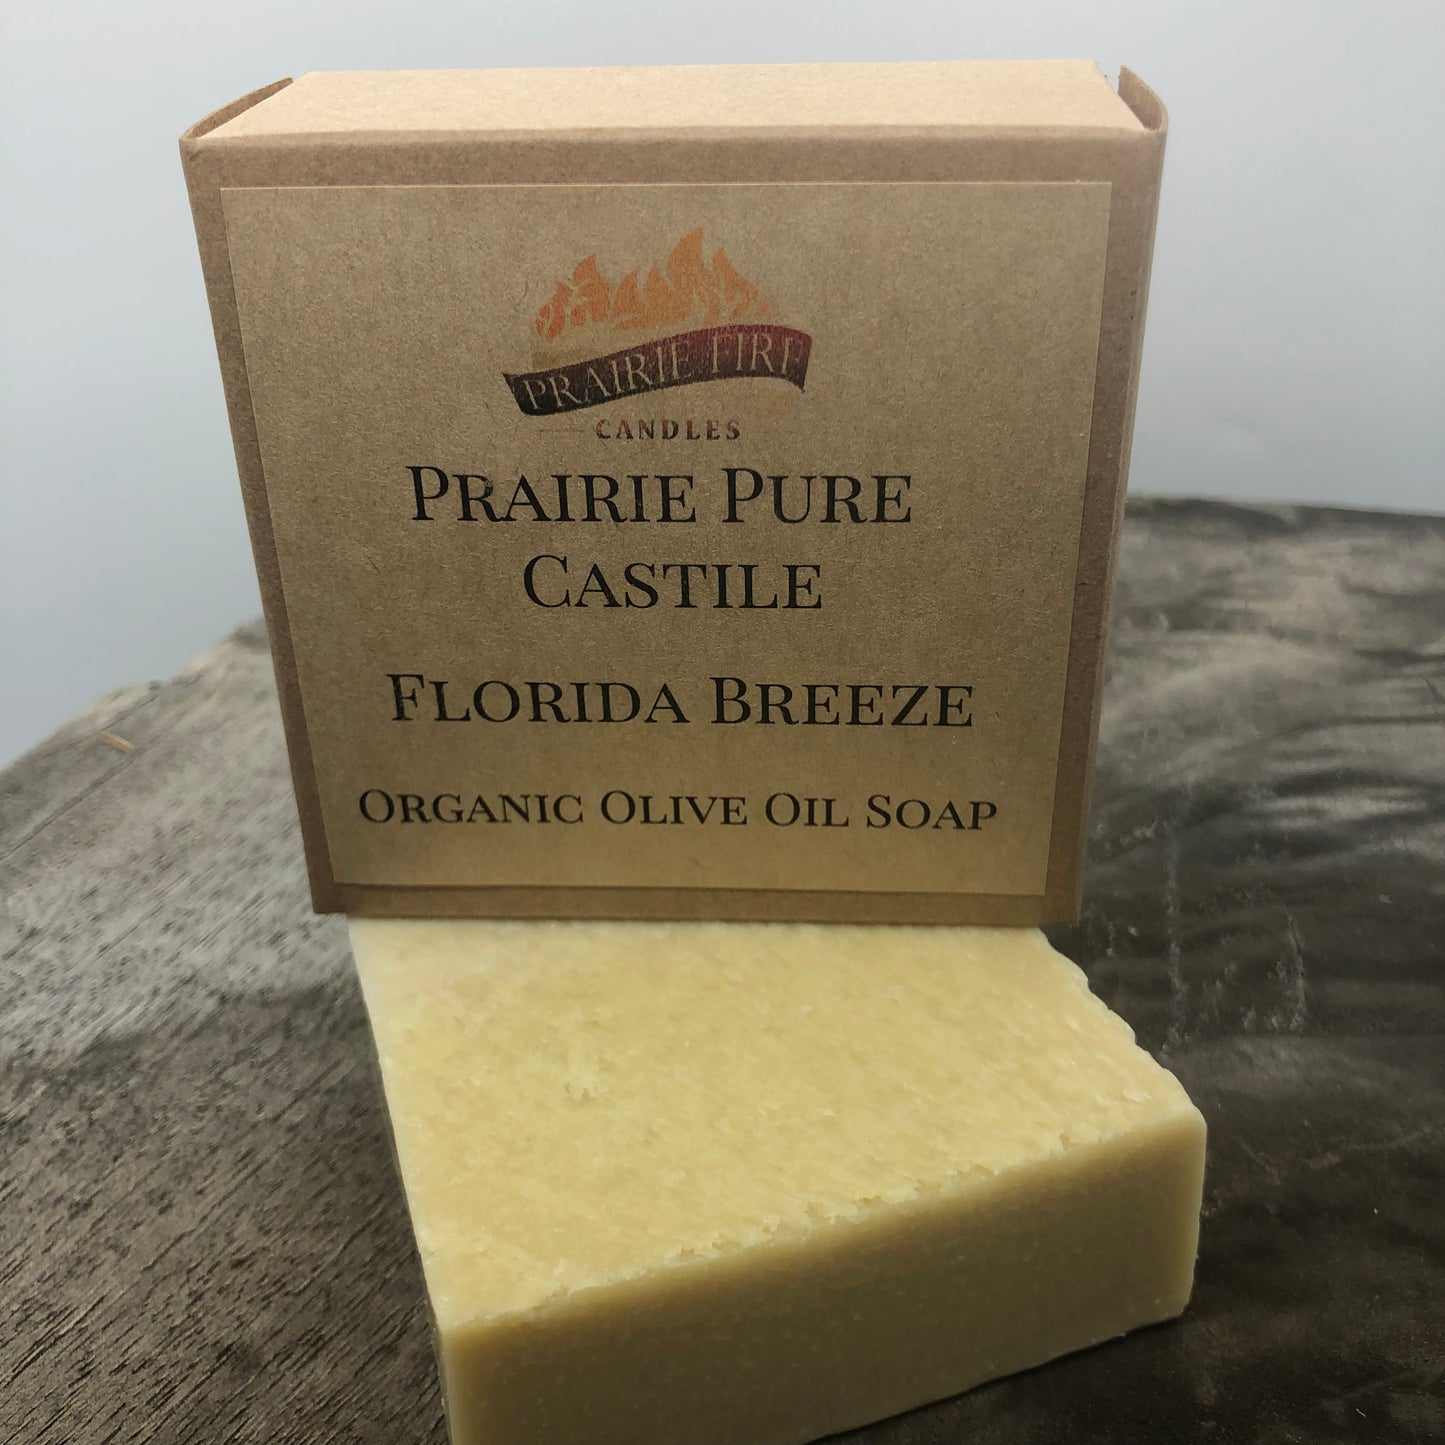 Florida Breeze Real Castile Organic Olive Oil Soap for Sensitive Skin - Dye Free - 100% Certified Organic Extra Virgin Olive Oil